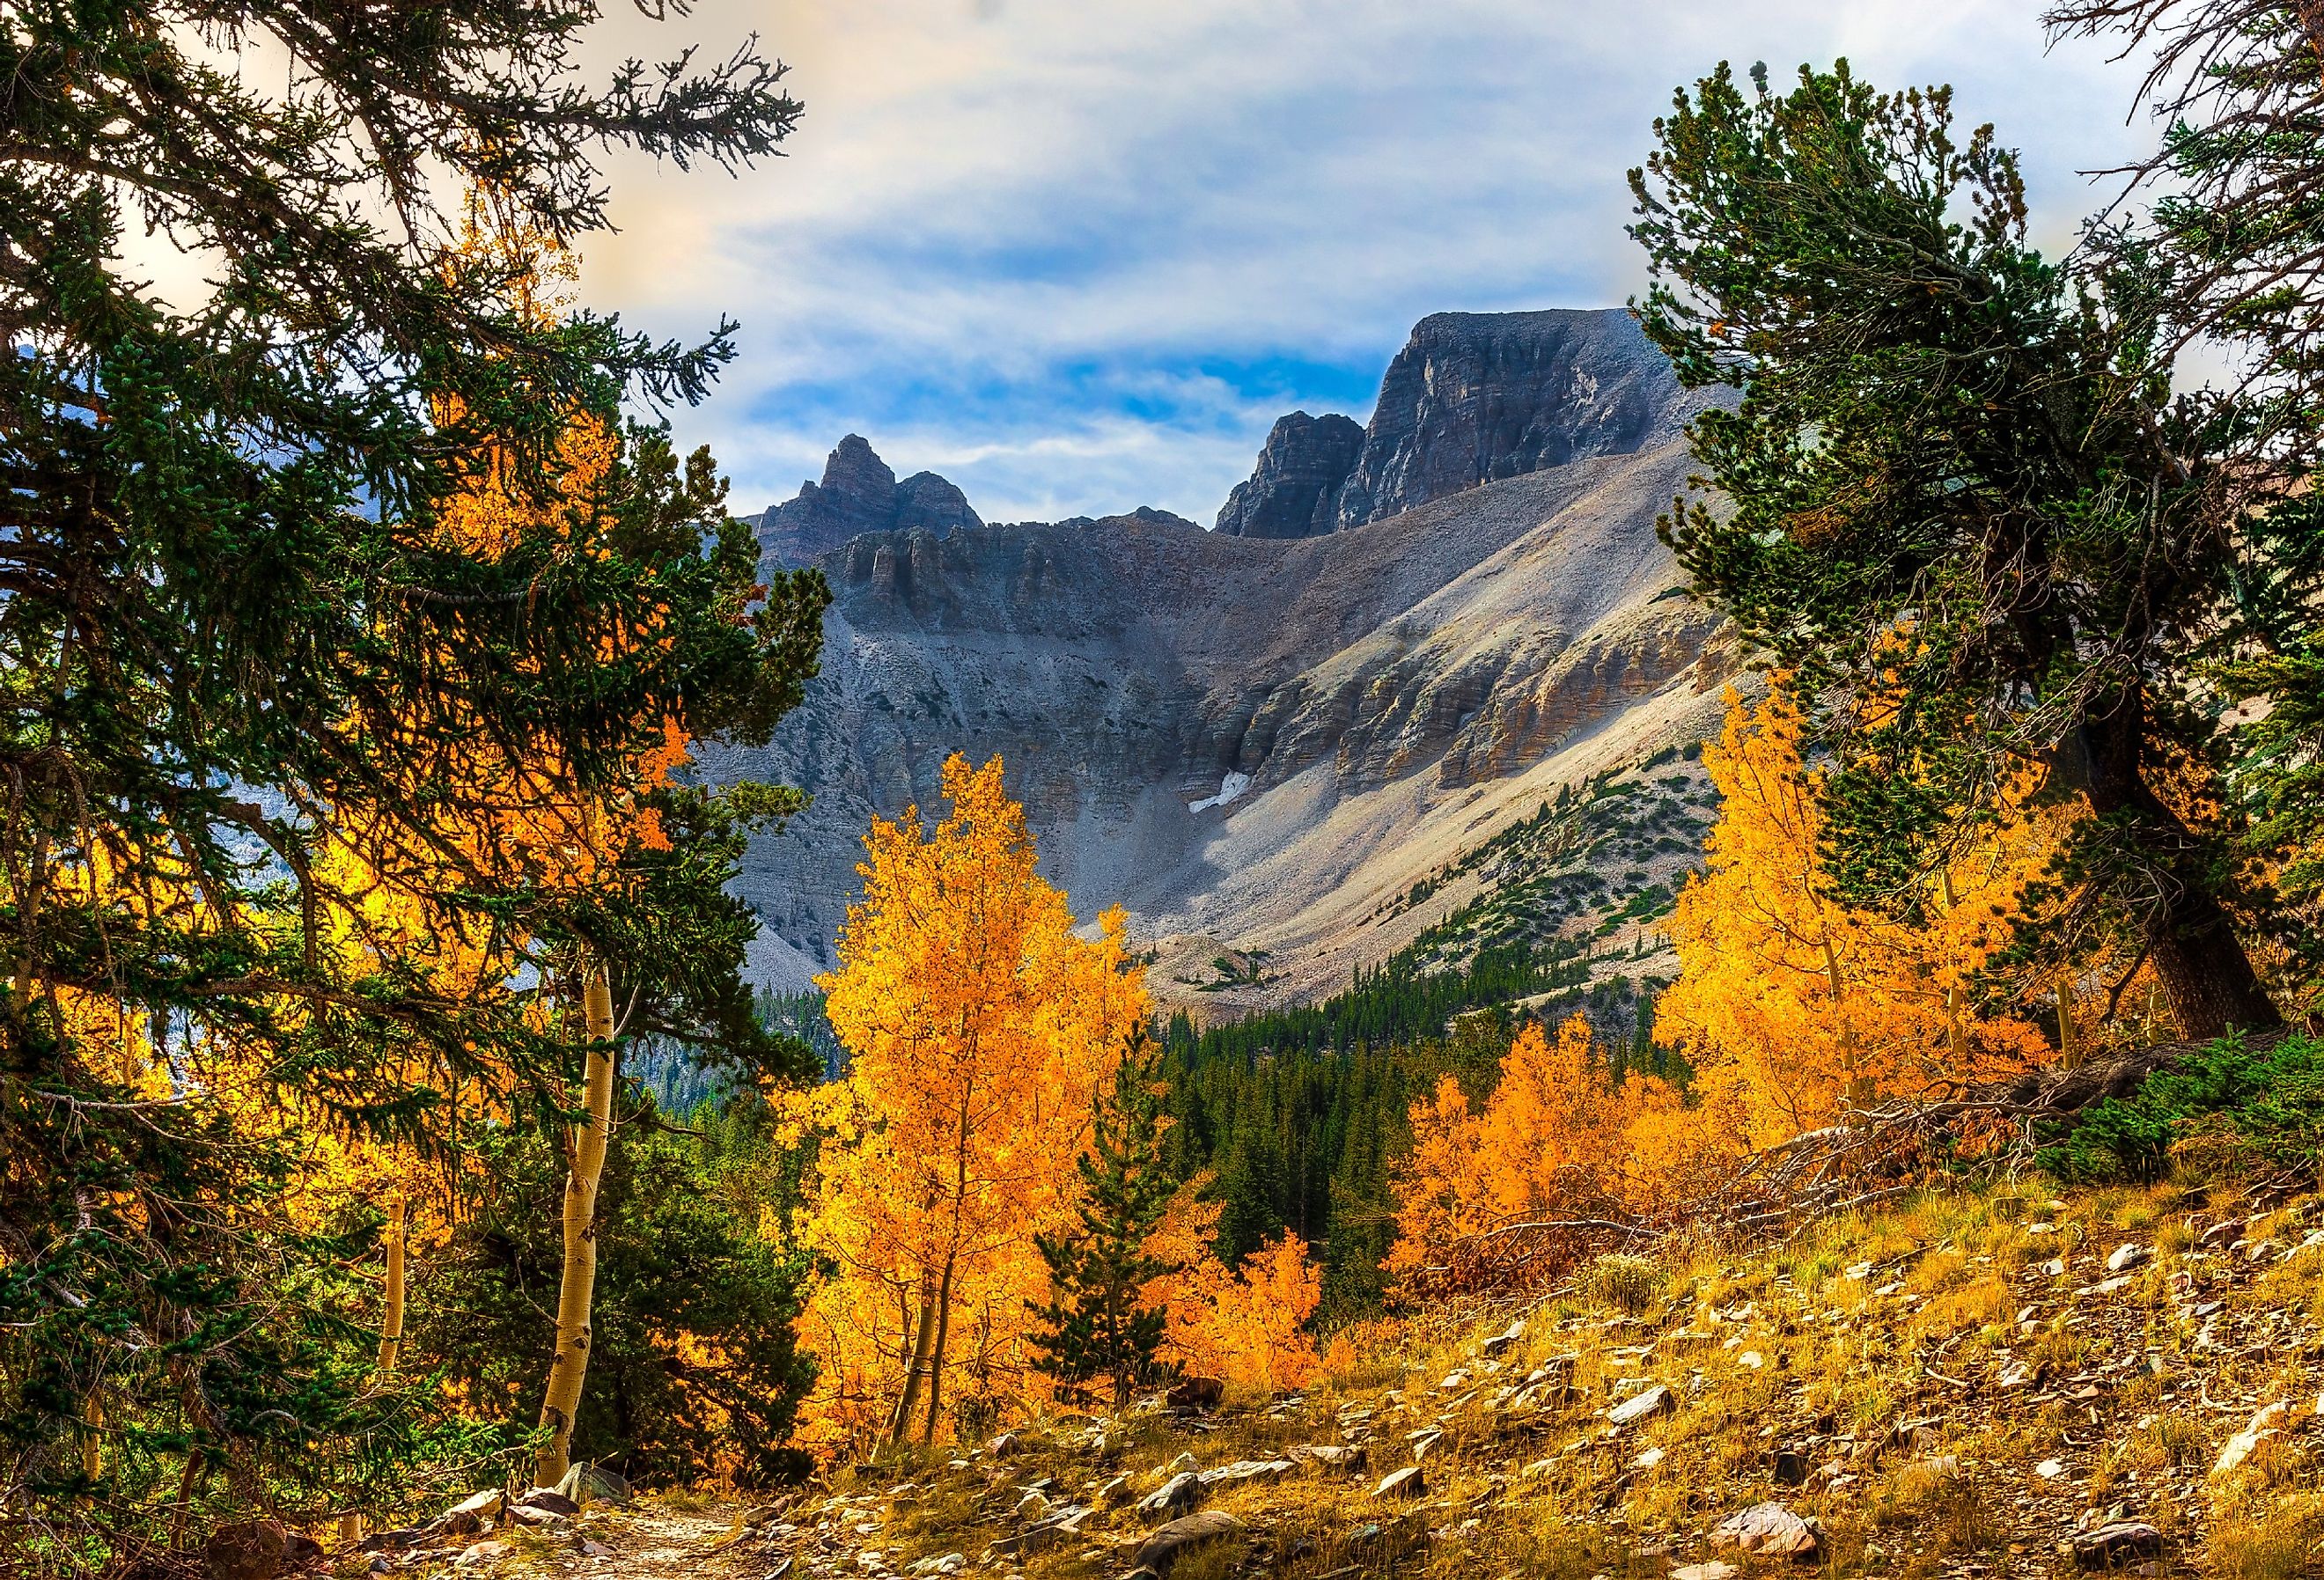 Wheeler Peak-Great Basin National Park, Nevada in the fall.